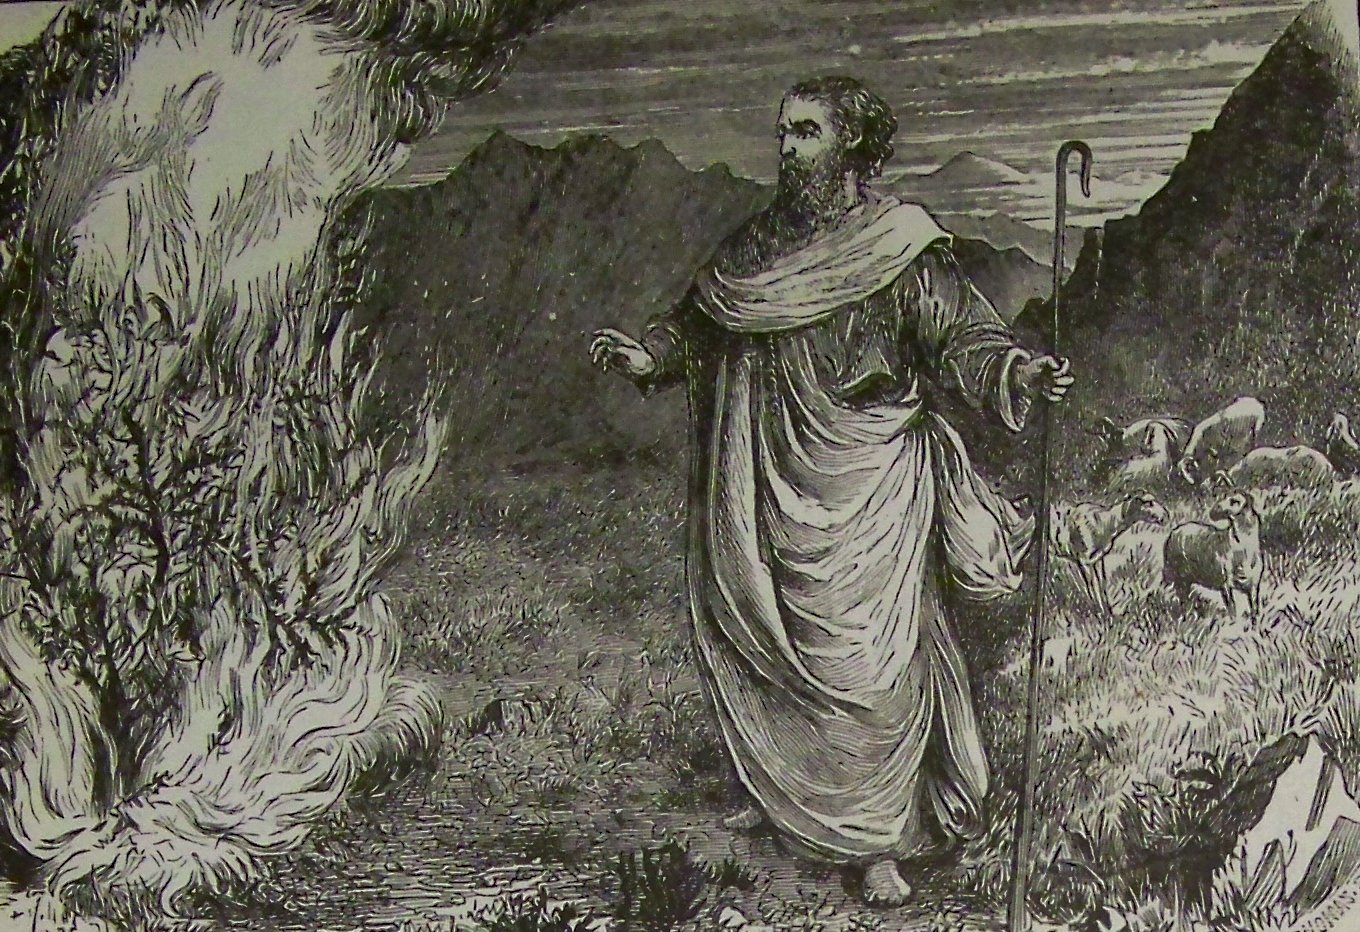 &ldquo;Holman Moses and the Burning Bush&rdquo; by illustrators of the 1890 Holman Bible - http://thebiblerevival.com/clipart/1890holmanbible/bw/mosesandtheburningbush.jpg. Licensed under Public Domain via Wikimedia Commons - https://commons.wikimedia.org/wiki/File:Holman_Moses_and_the_Burning_Bush.jpg#/media/File:Holman_Moses_and_the_Burning_Bush.jpg